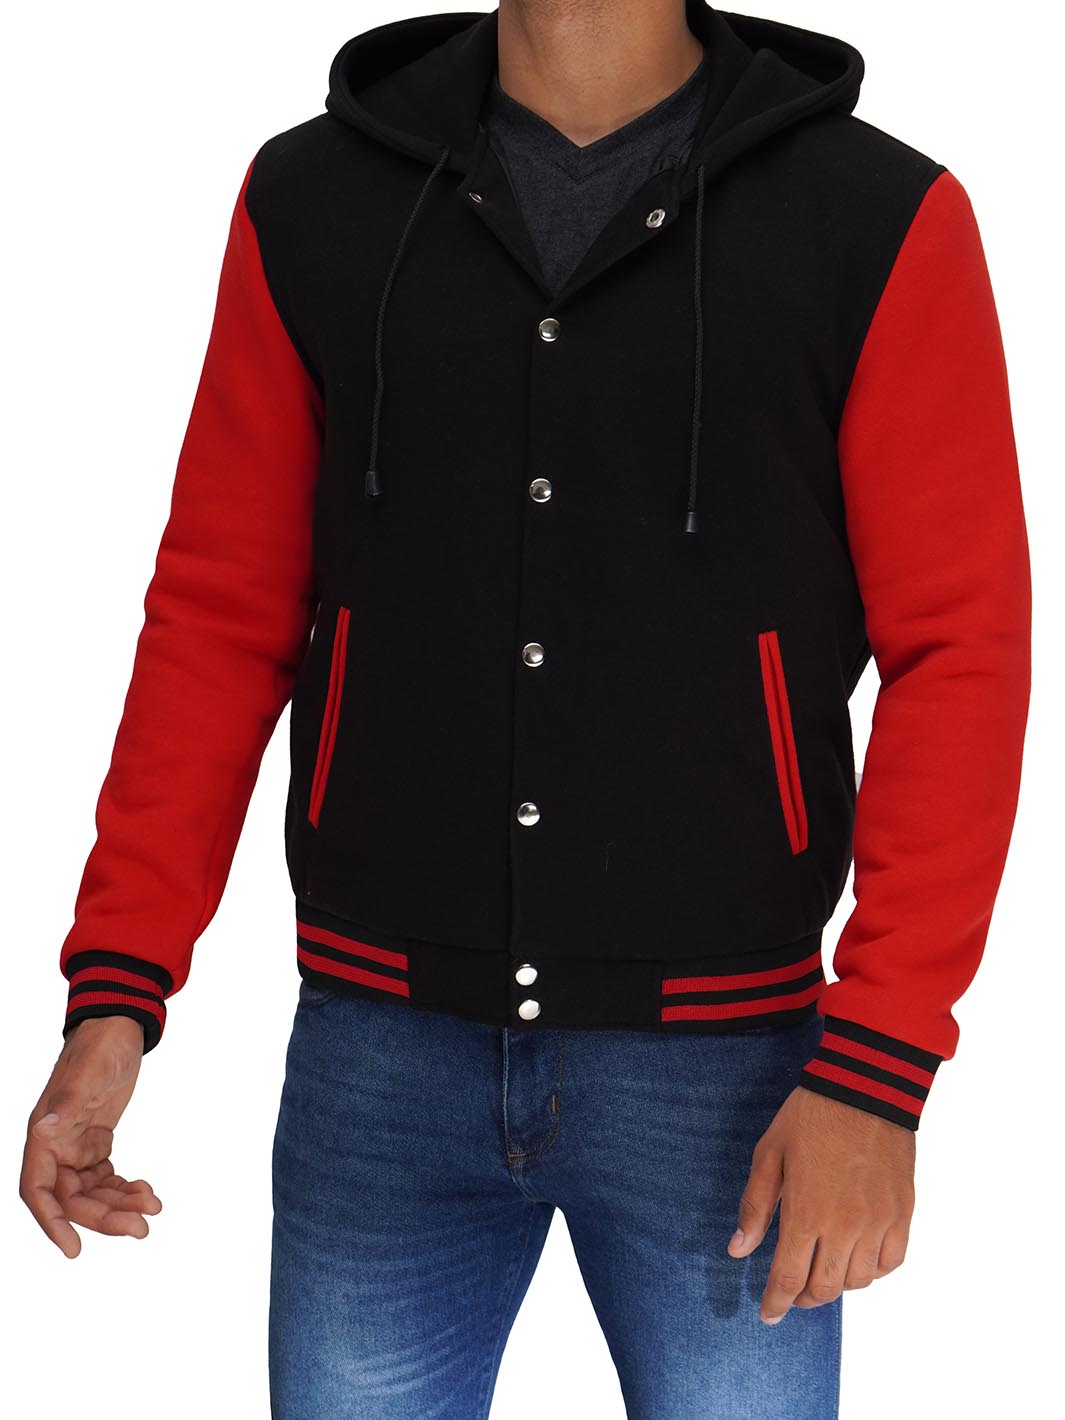 Men's Red and Black Hooded Lettermen Jacket